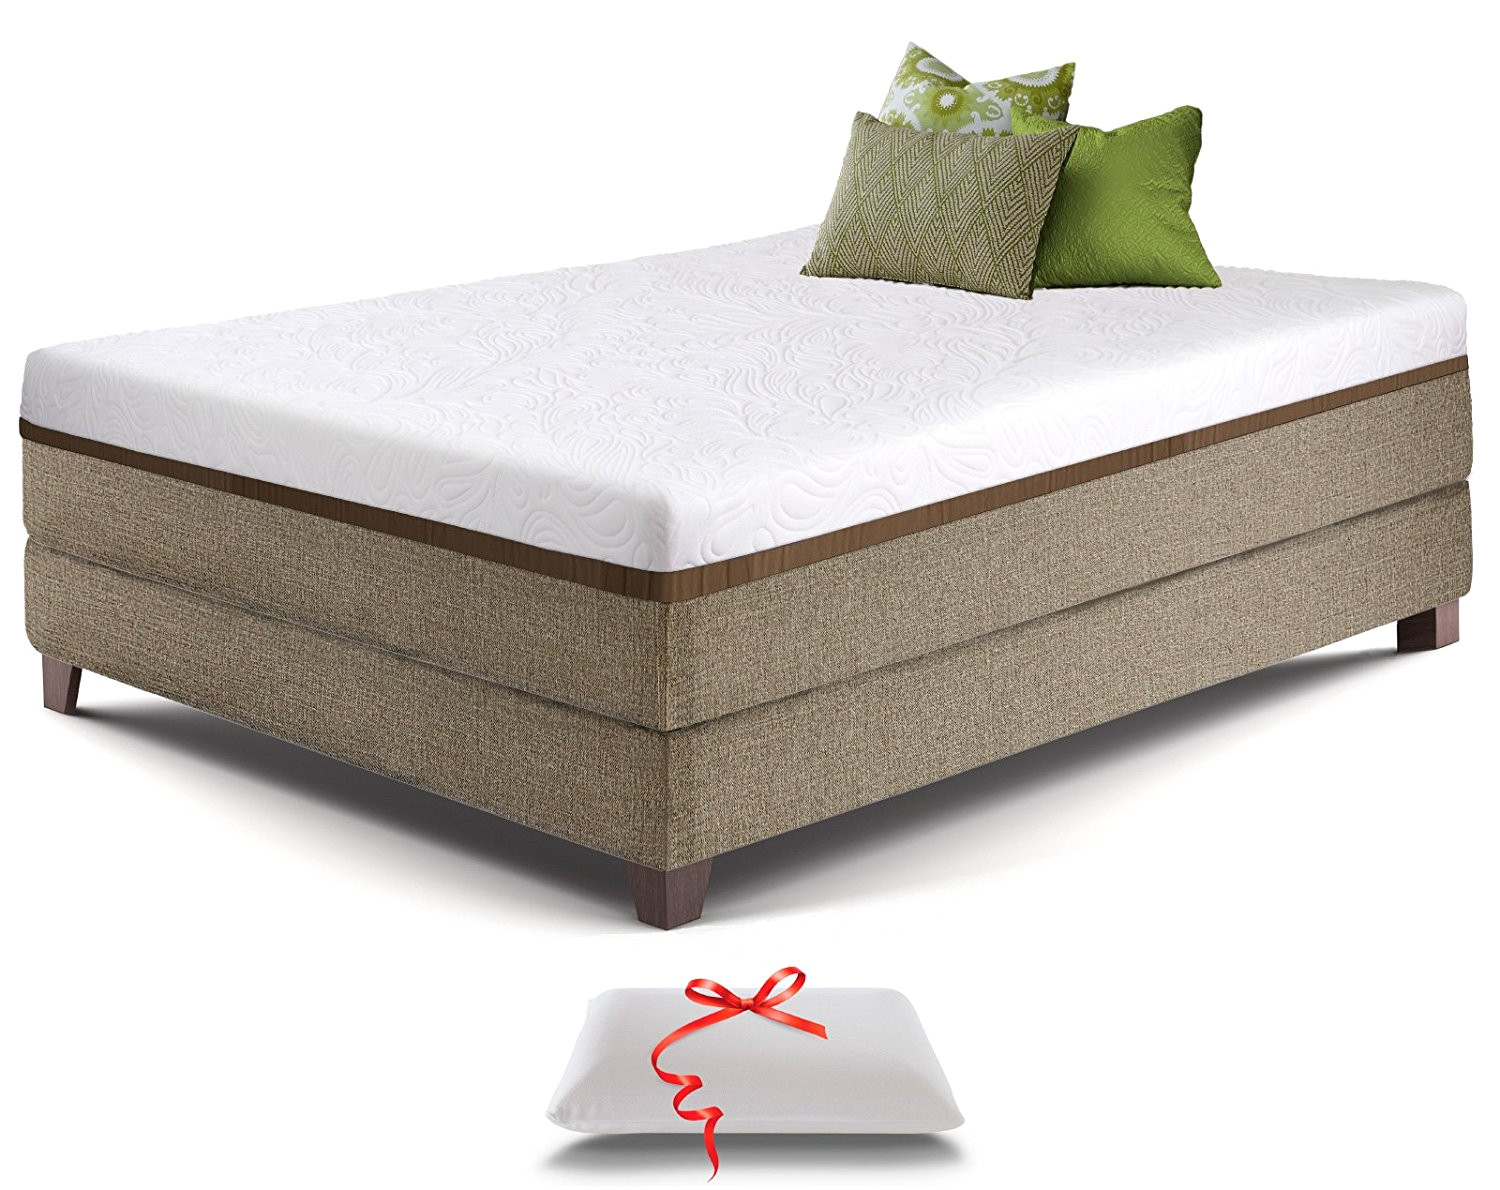 amazon com live sleep ultra king mattress gel memory foam mattress 12 inch king size medium firm bed in a box bonus luxury form pillow certipur